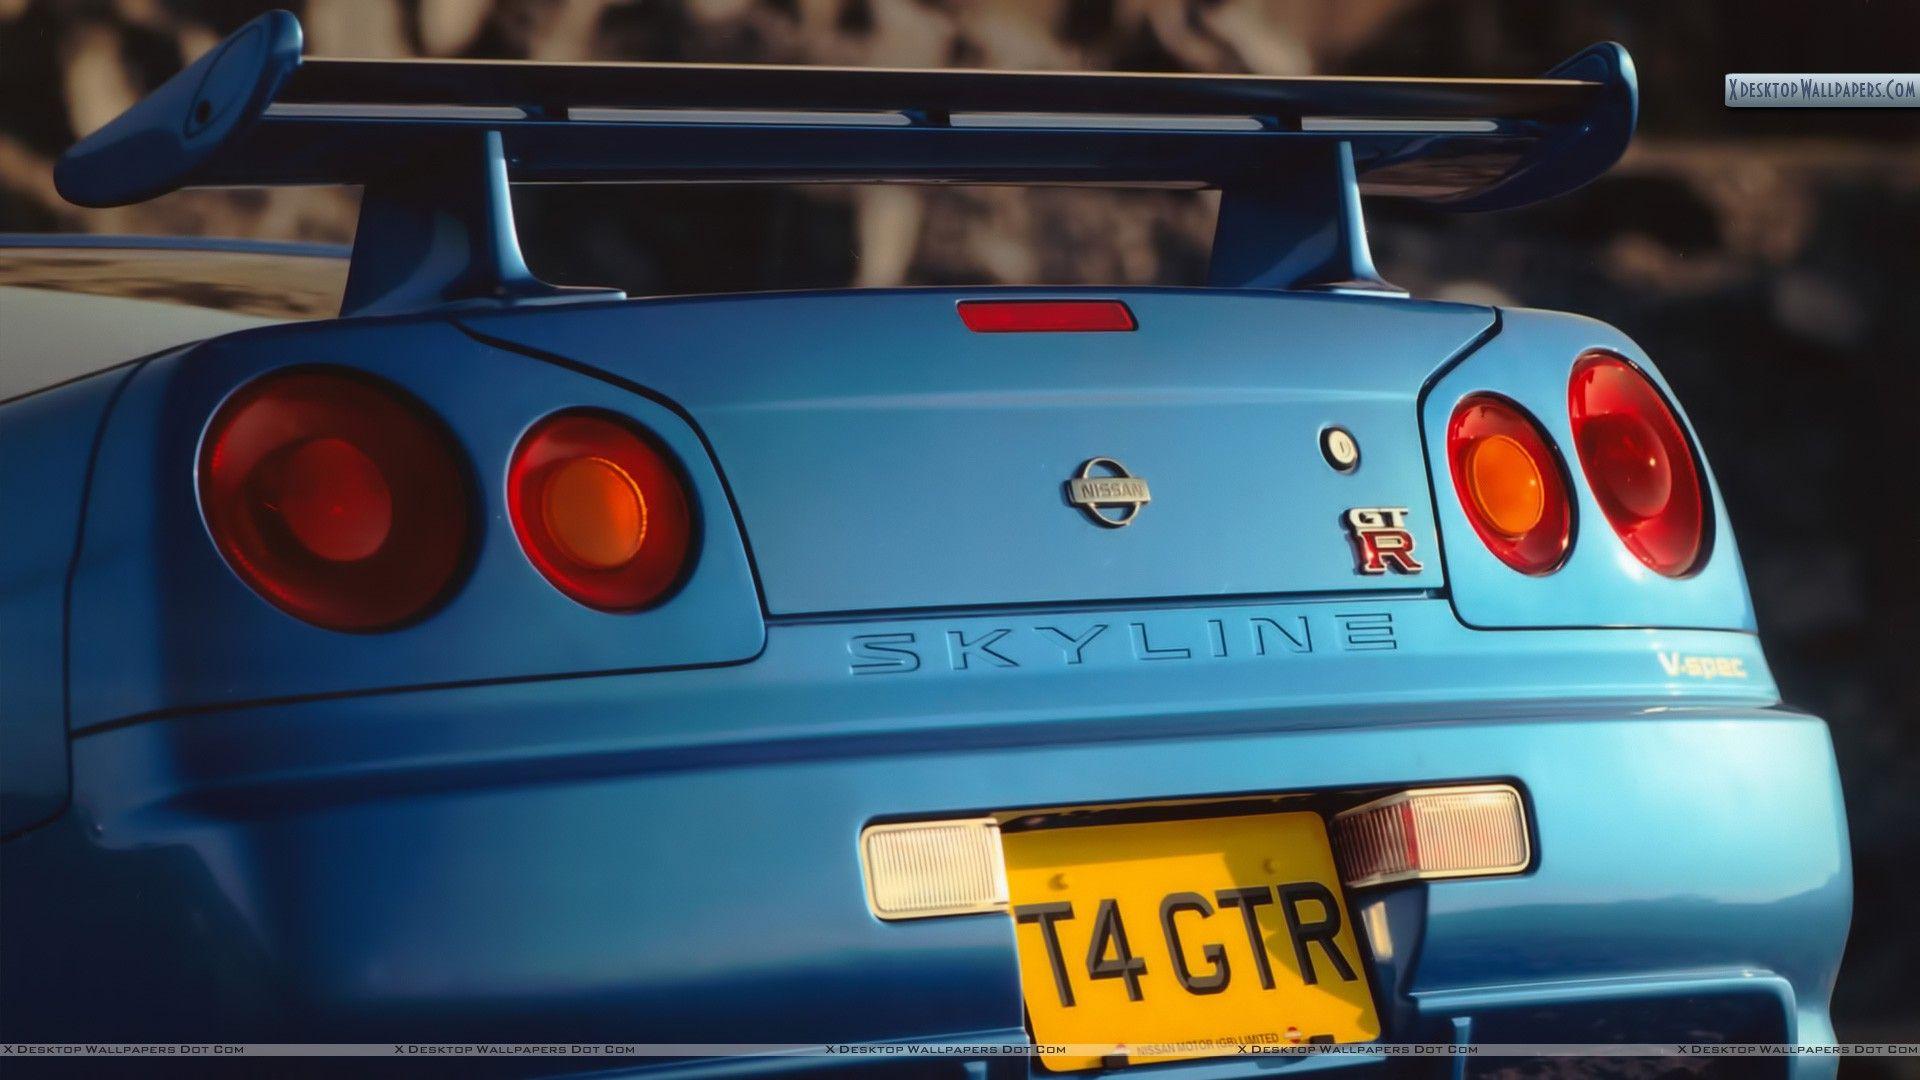 Nissan Skyline GT R Wallpaper, Photo & Image In HD